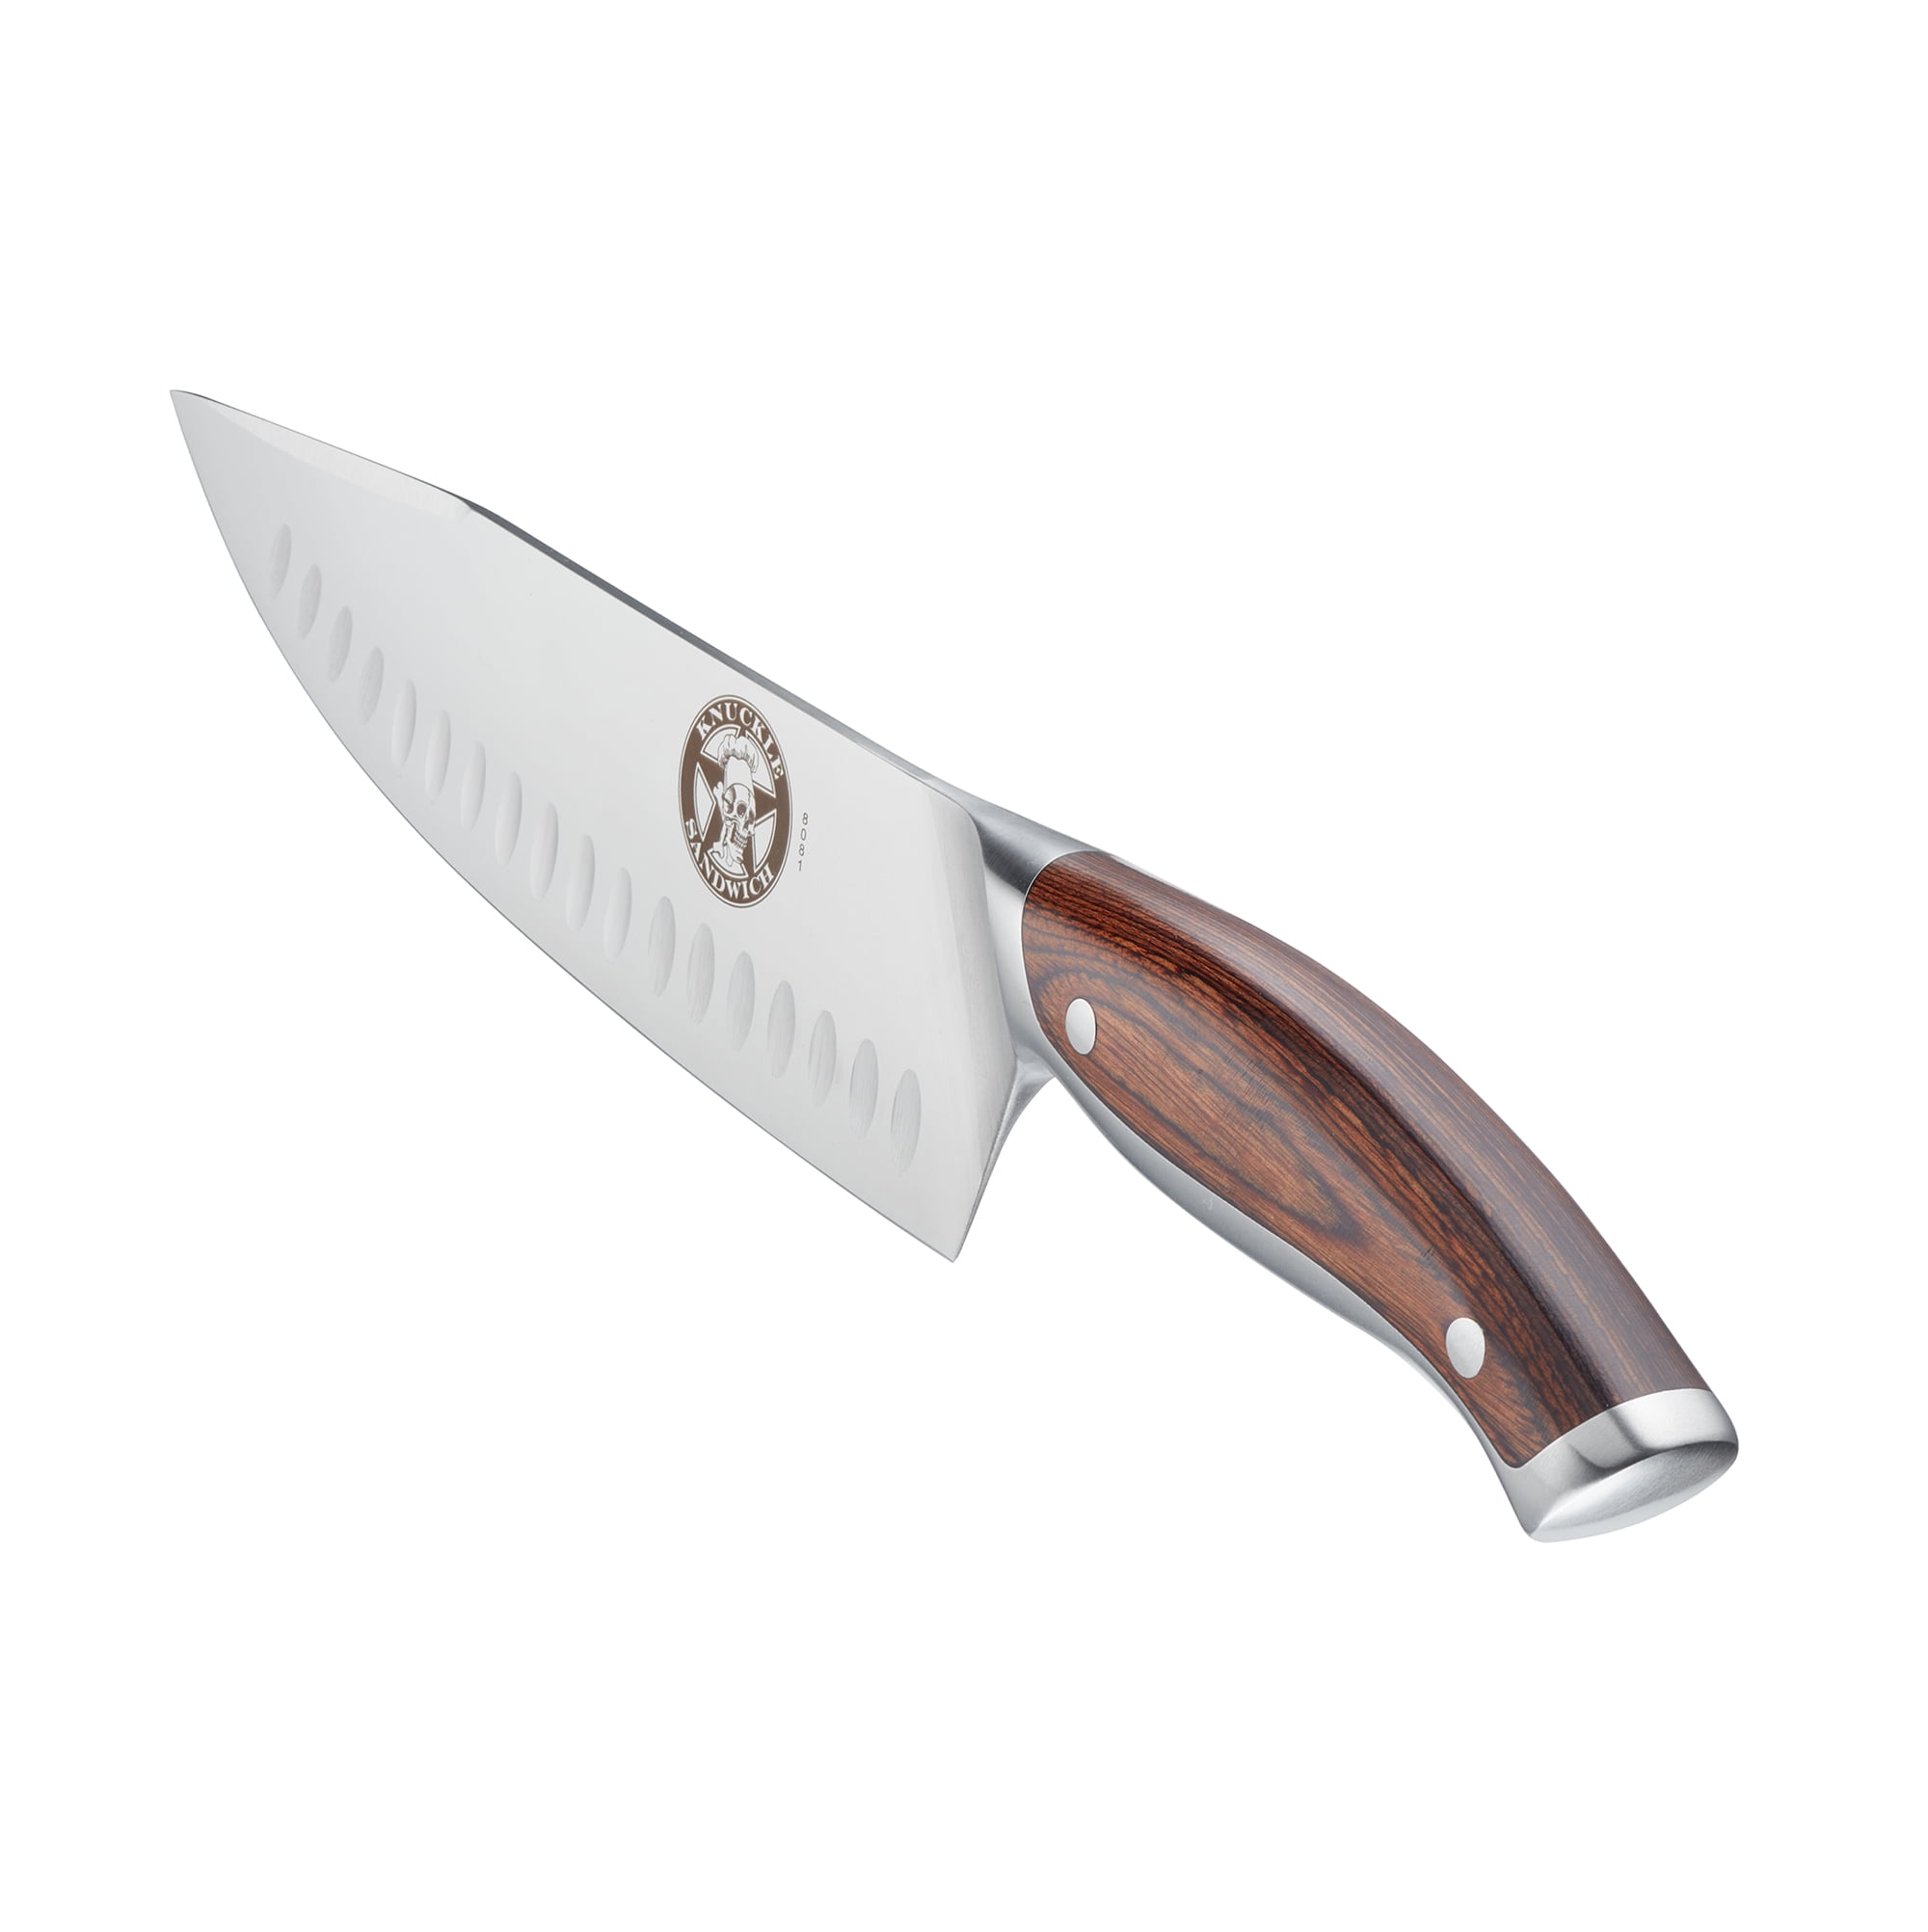 Guy Fieri Knuckle Sandwich Utility Knife, 5-1/2-Inch Blade, Made